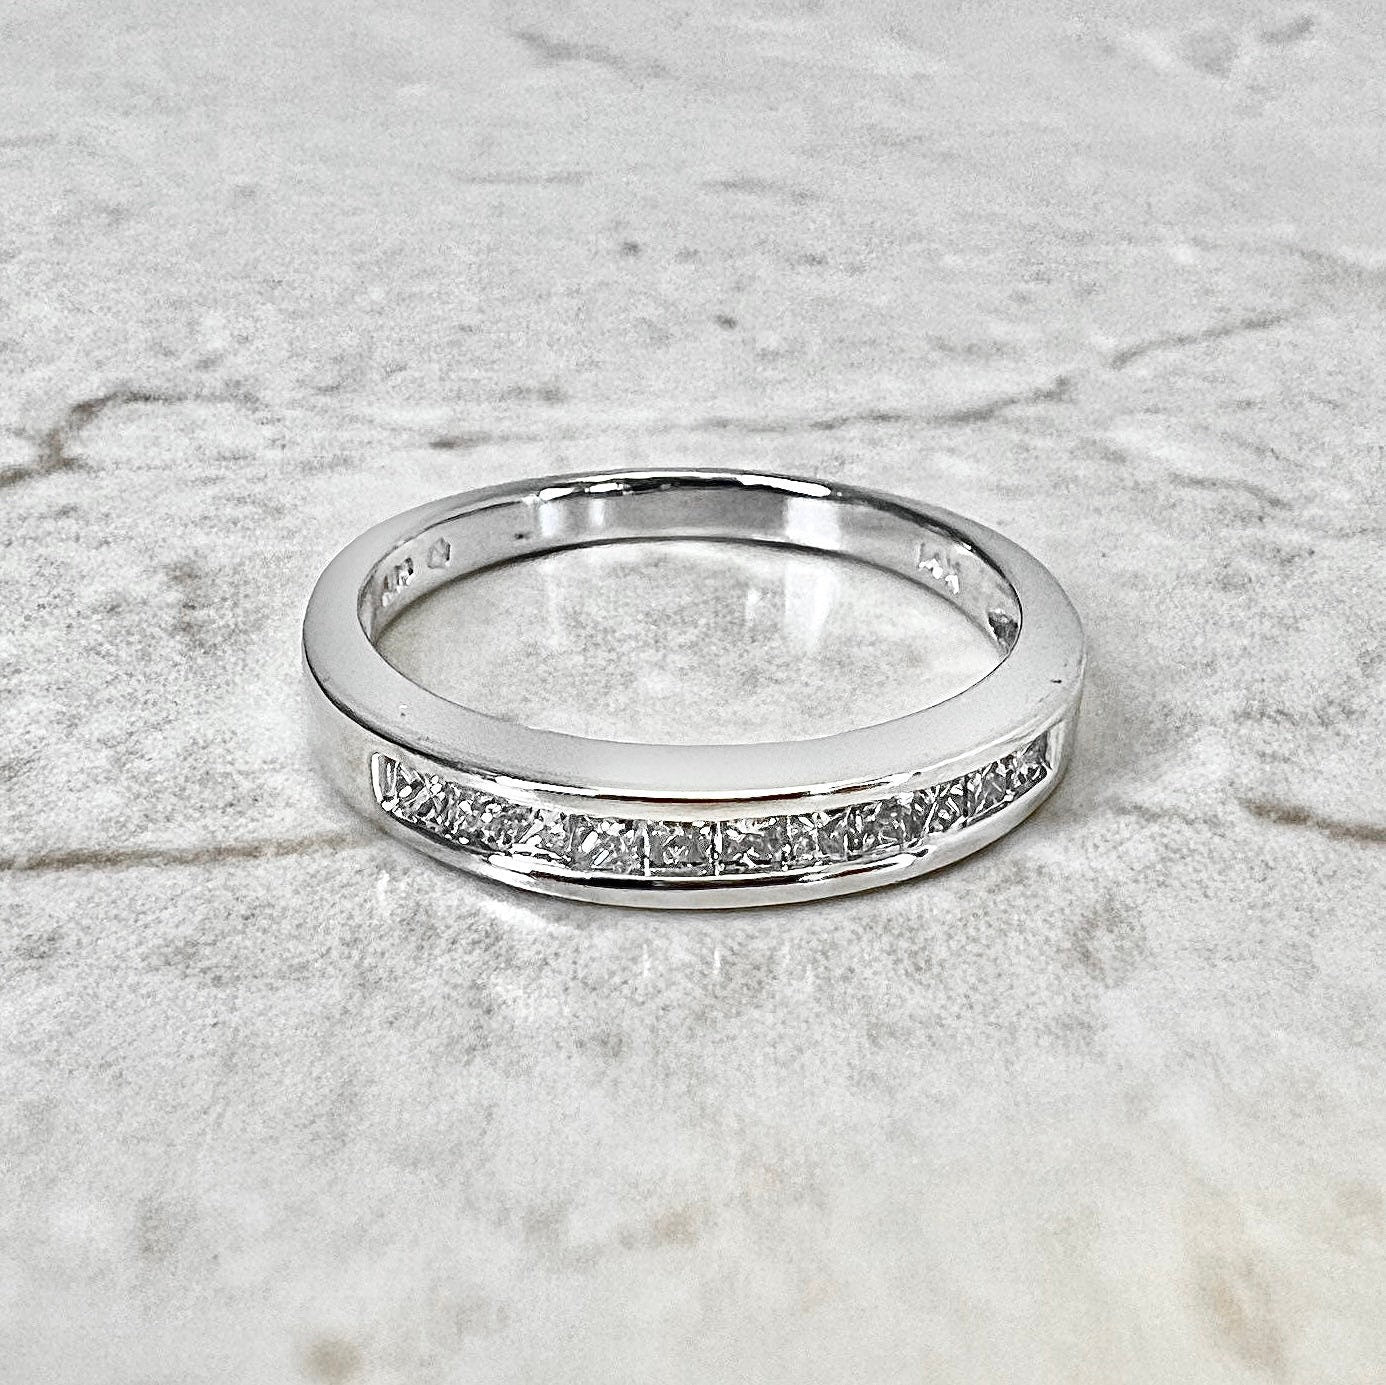 14K Princess Cut Diamond Band Ring - White Gold Diamond Band - Anniversary Ring - Half Eternity Ring - Best Gift For Her